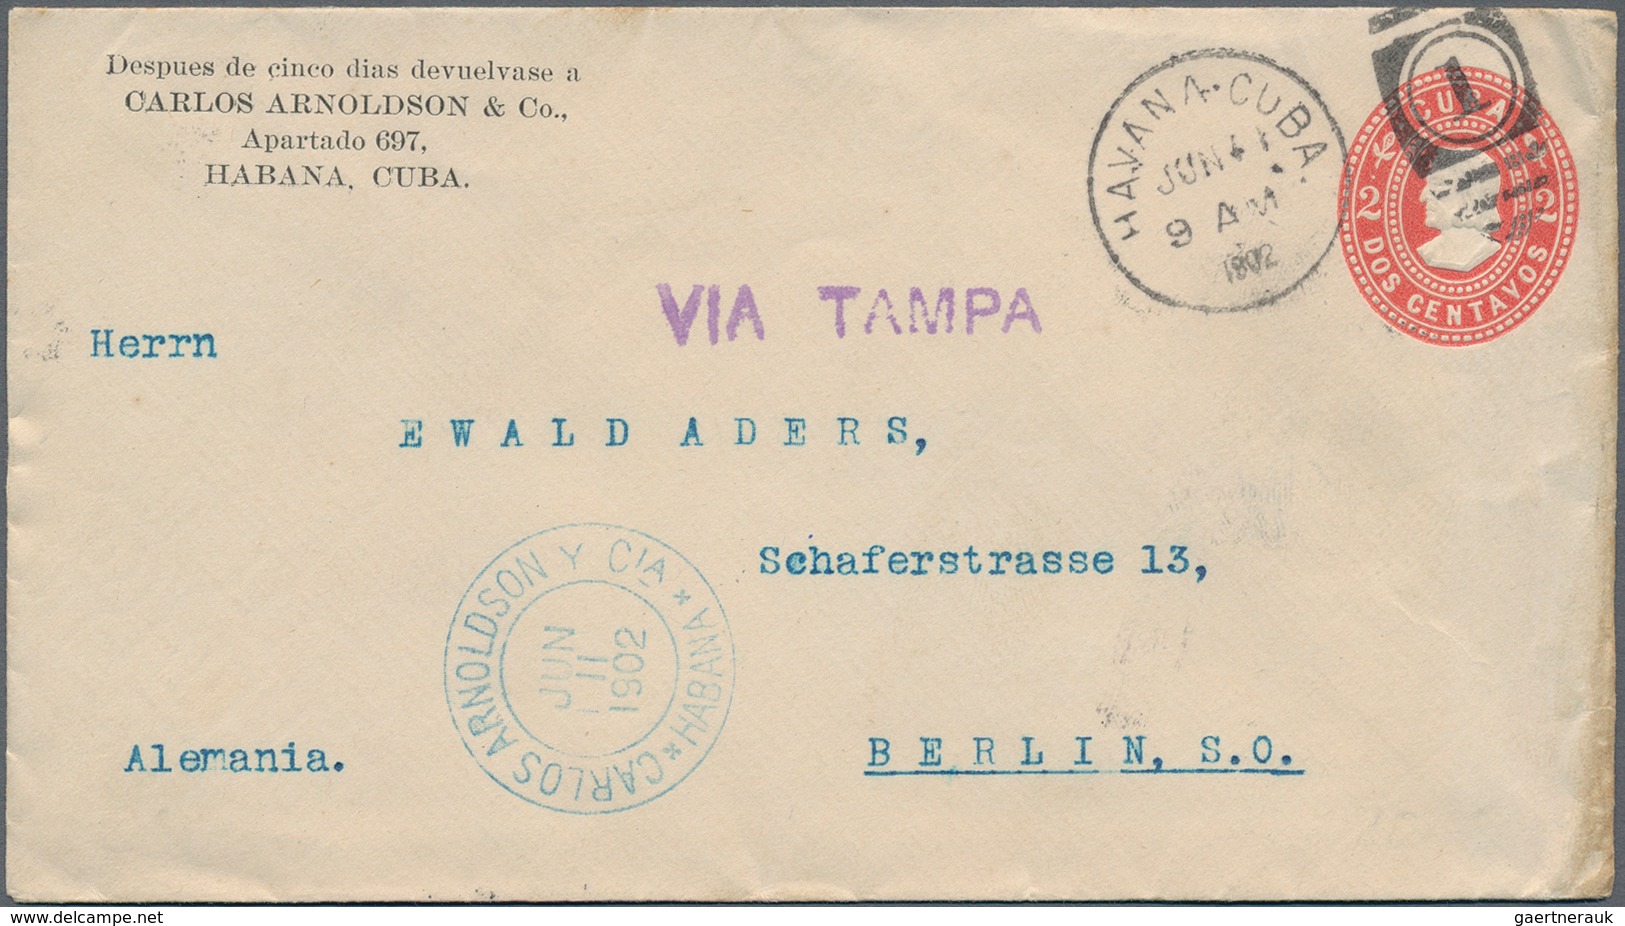 Karibik: 1908/70 (ca.), Covers/used Stationery Of Cuba (23), Dominican Republic (11), Haiti (5) And - Otros - América